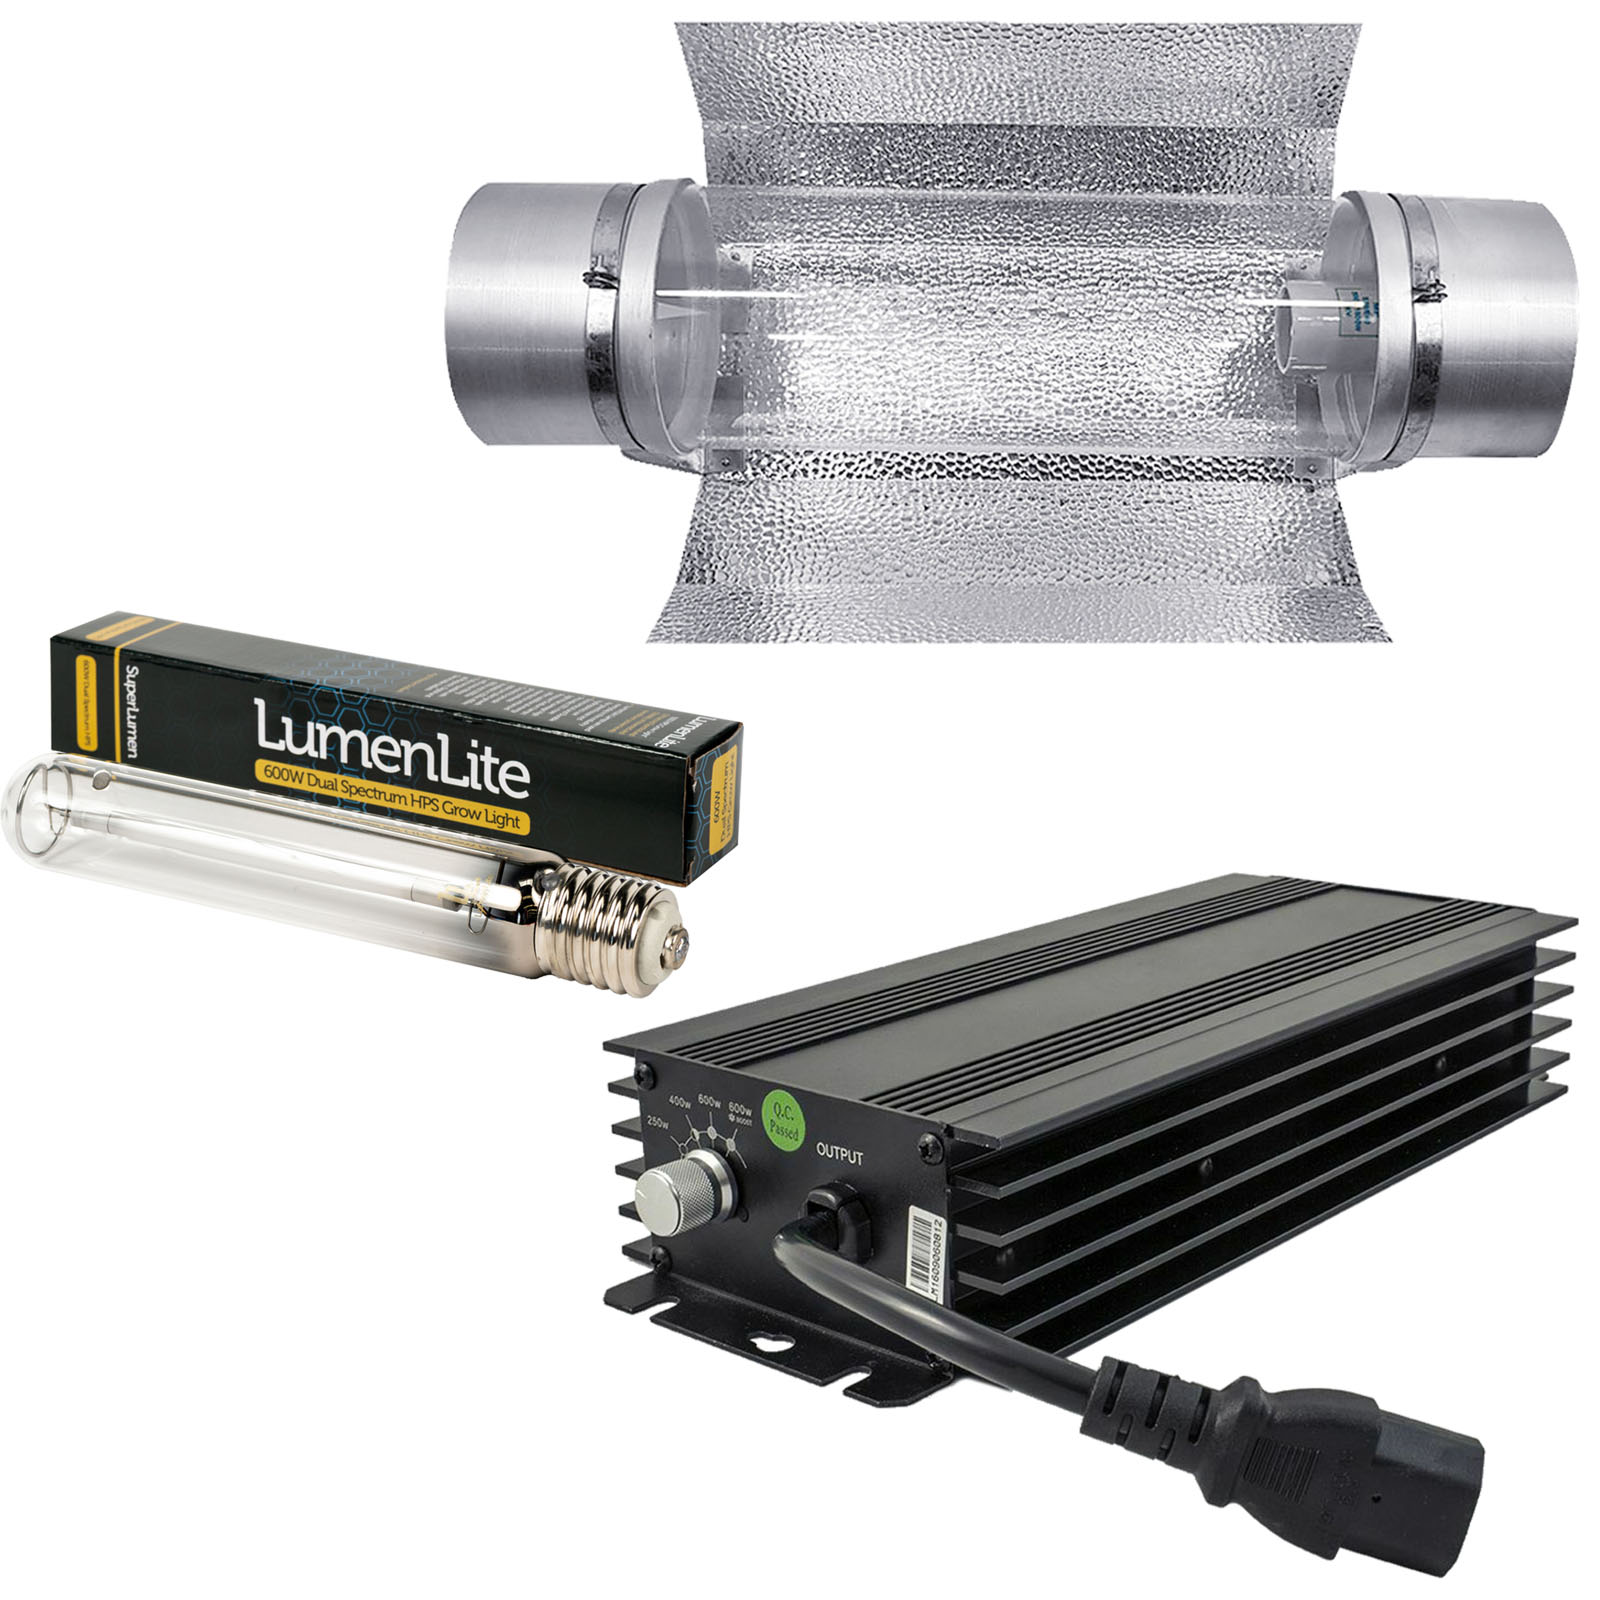 LumenLite 600w Magnetic Ballast Grow Light Hydroponics 